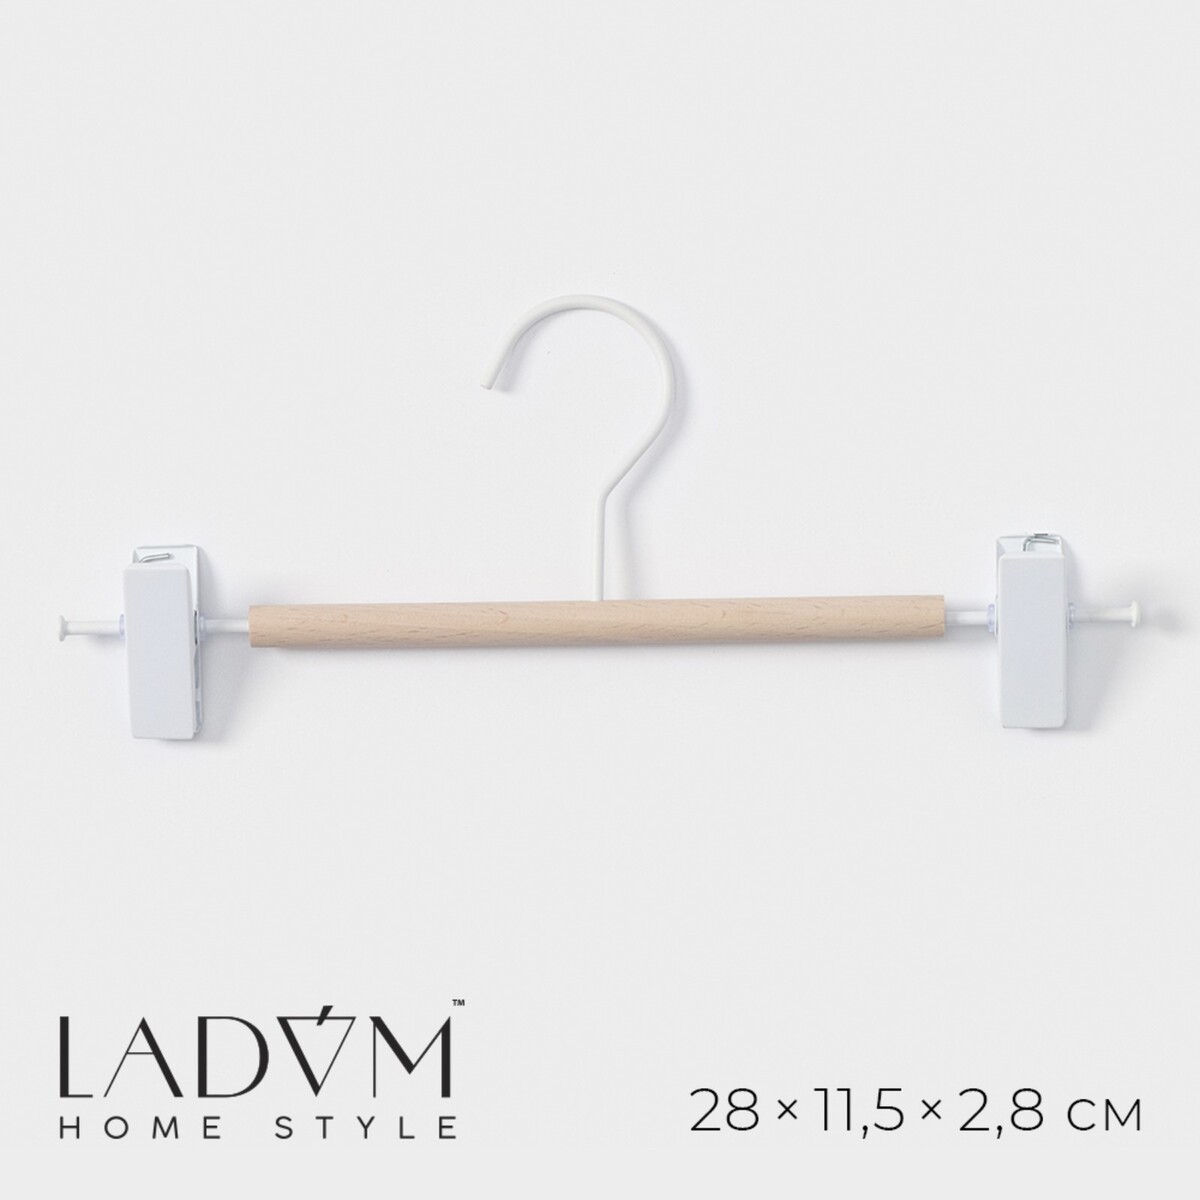 Вешалка для брюк и юбок ladо́m laconique, 28×11,5×2,8 см, цвет белый вешалка для брюк и юбок с зажимами ladо́m laconique 28×11 5×2 8 см розовый